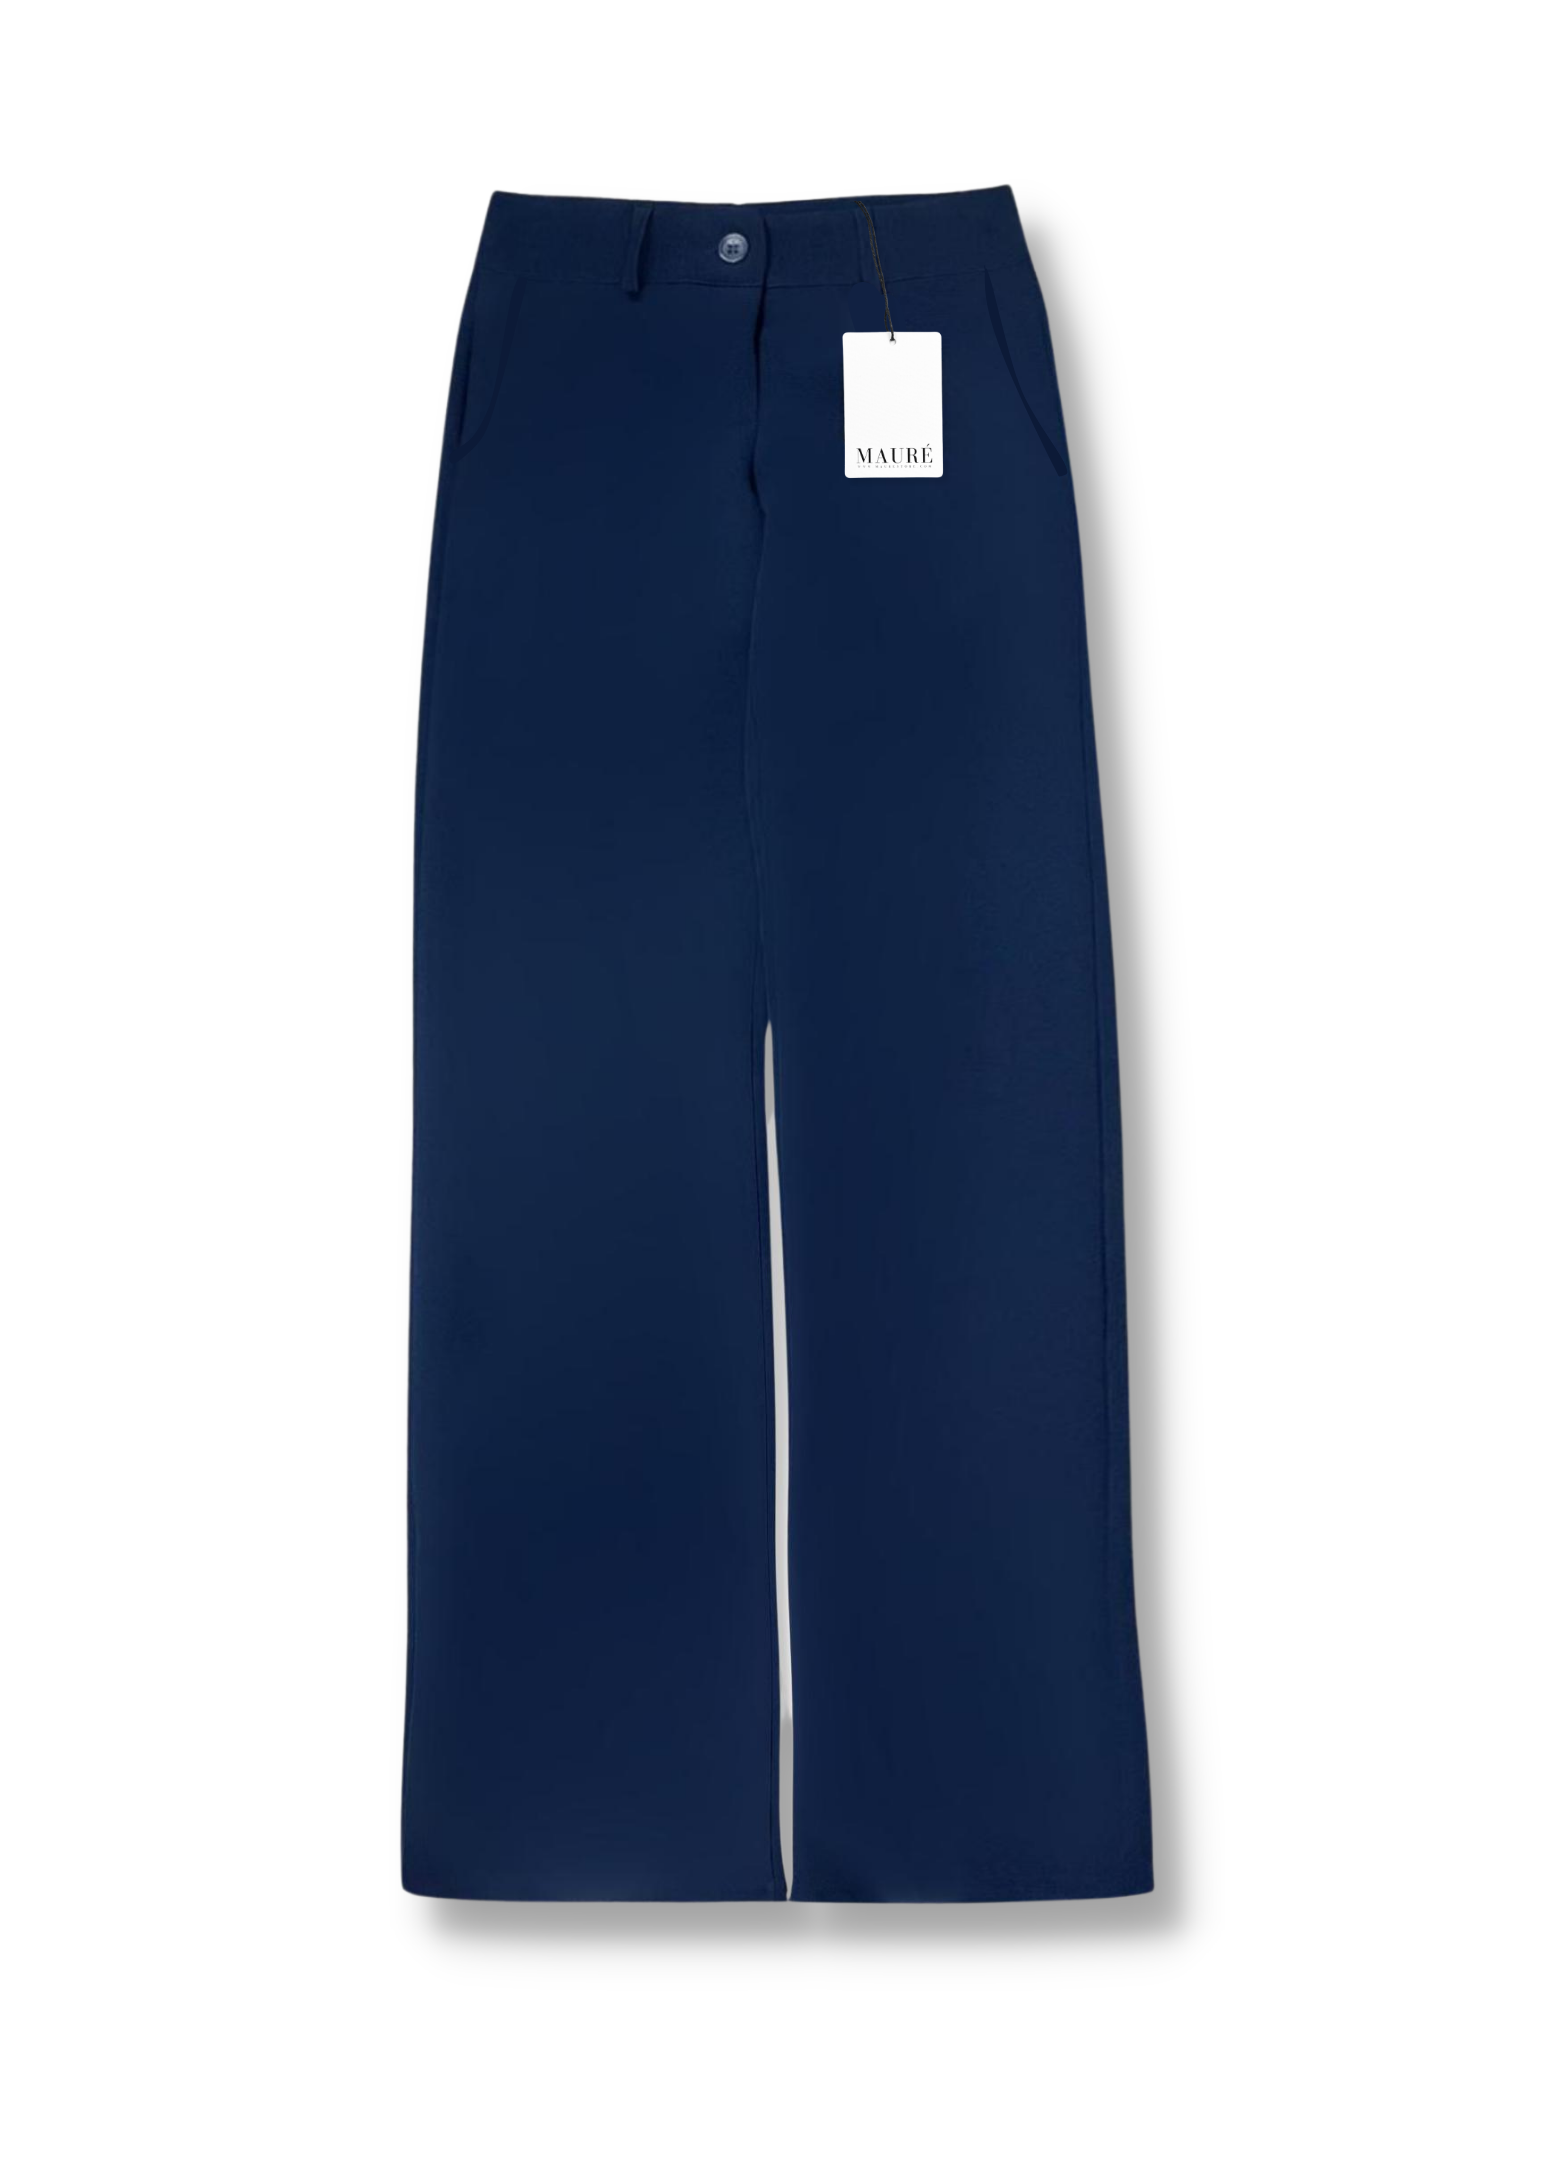 Pantalon droit taille basse/mi-longue casual bleu nuit (REGULAR)